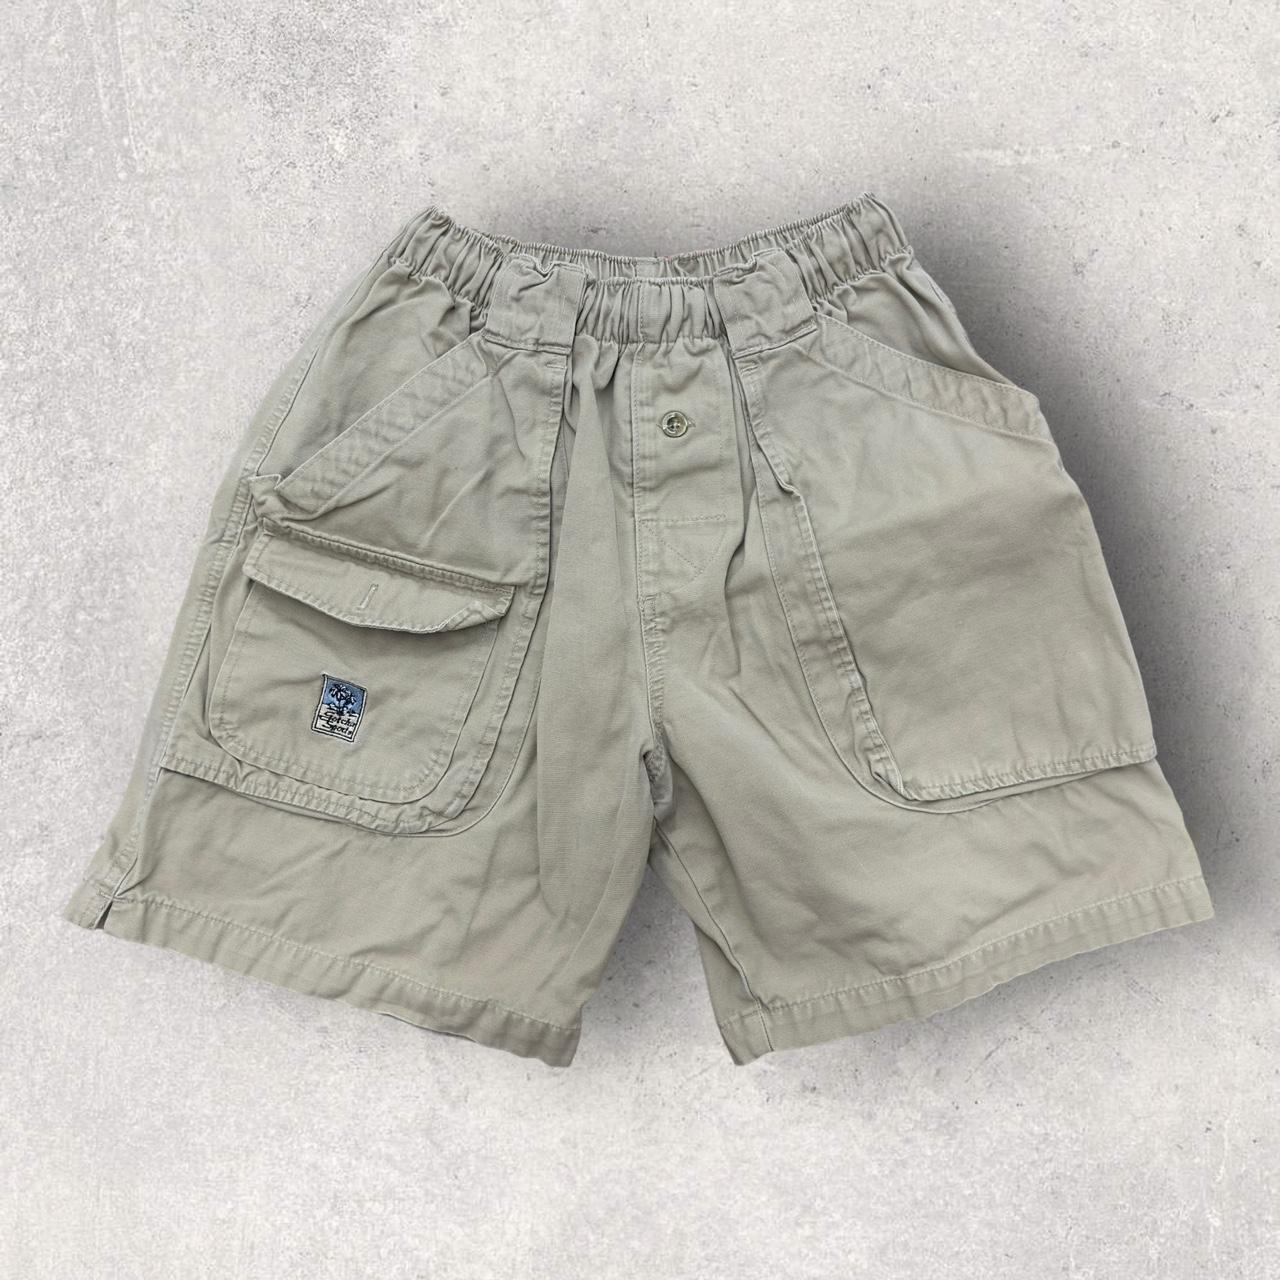 Vintage Gotcha surf cargo shorts in khaki. From the... - Depop